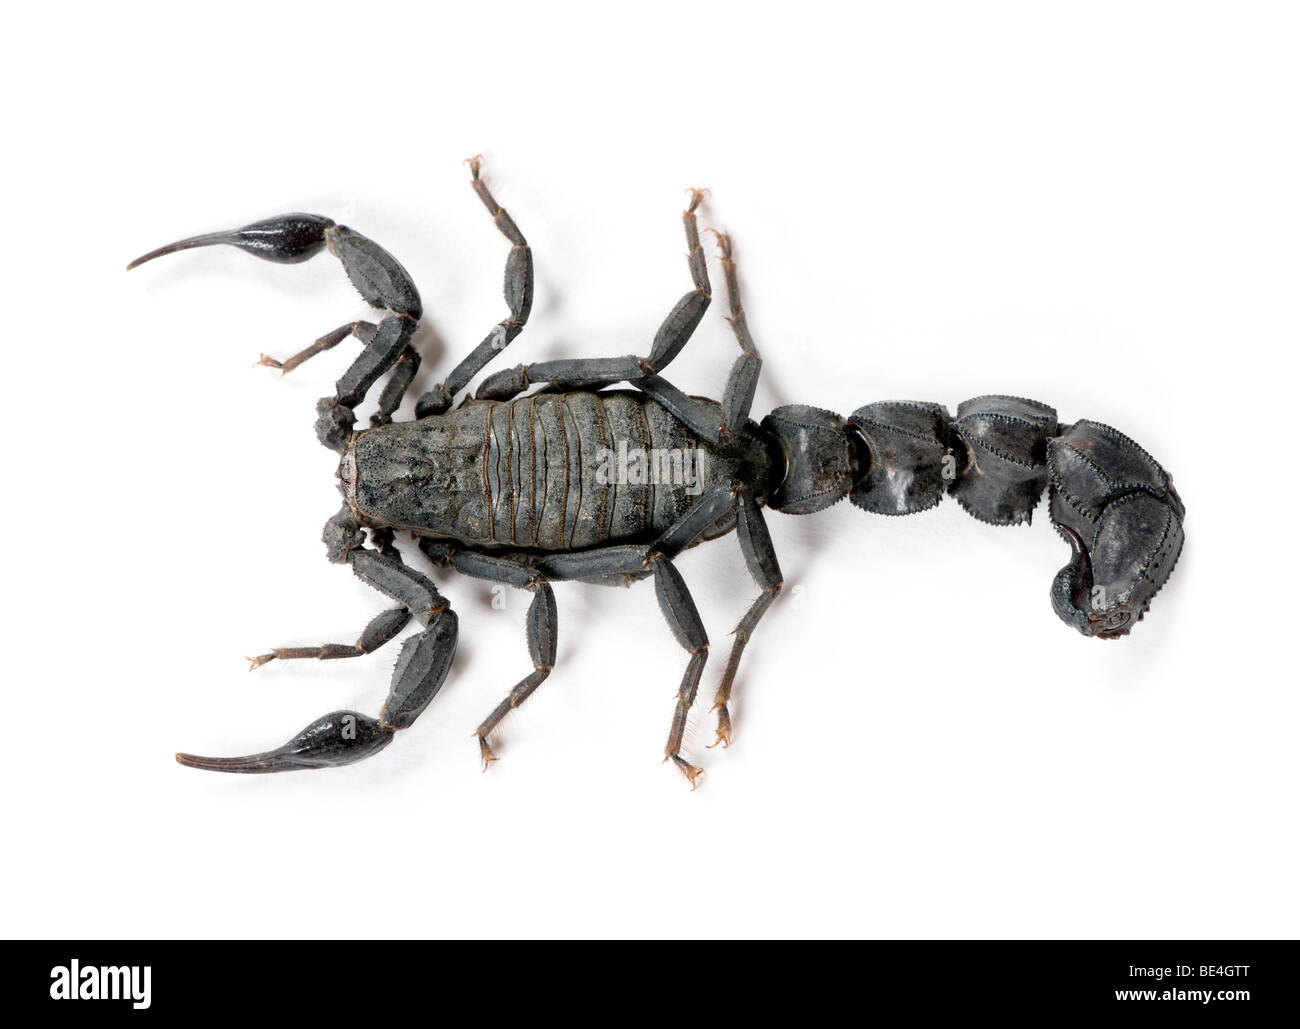 High angle view of Scorpion, Androctonus mauretanicus, against white background, studio shot Stock Photo